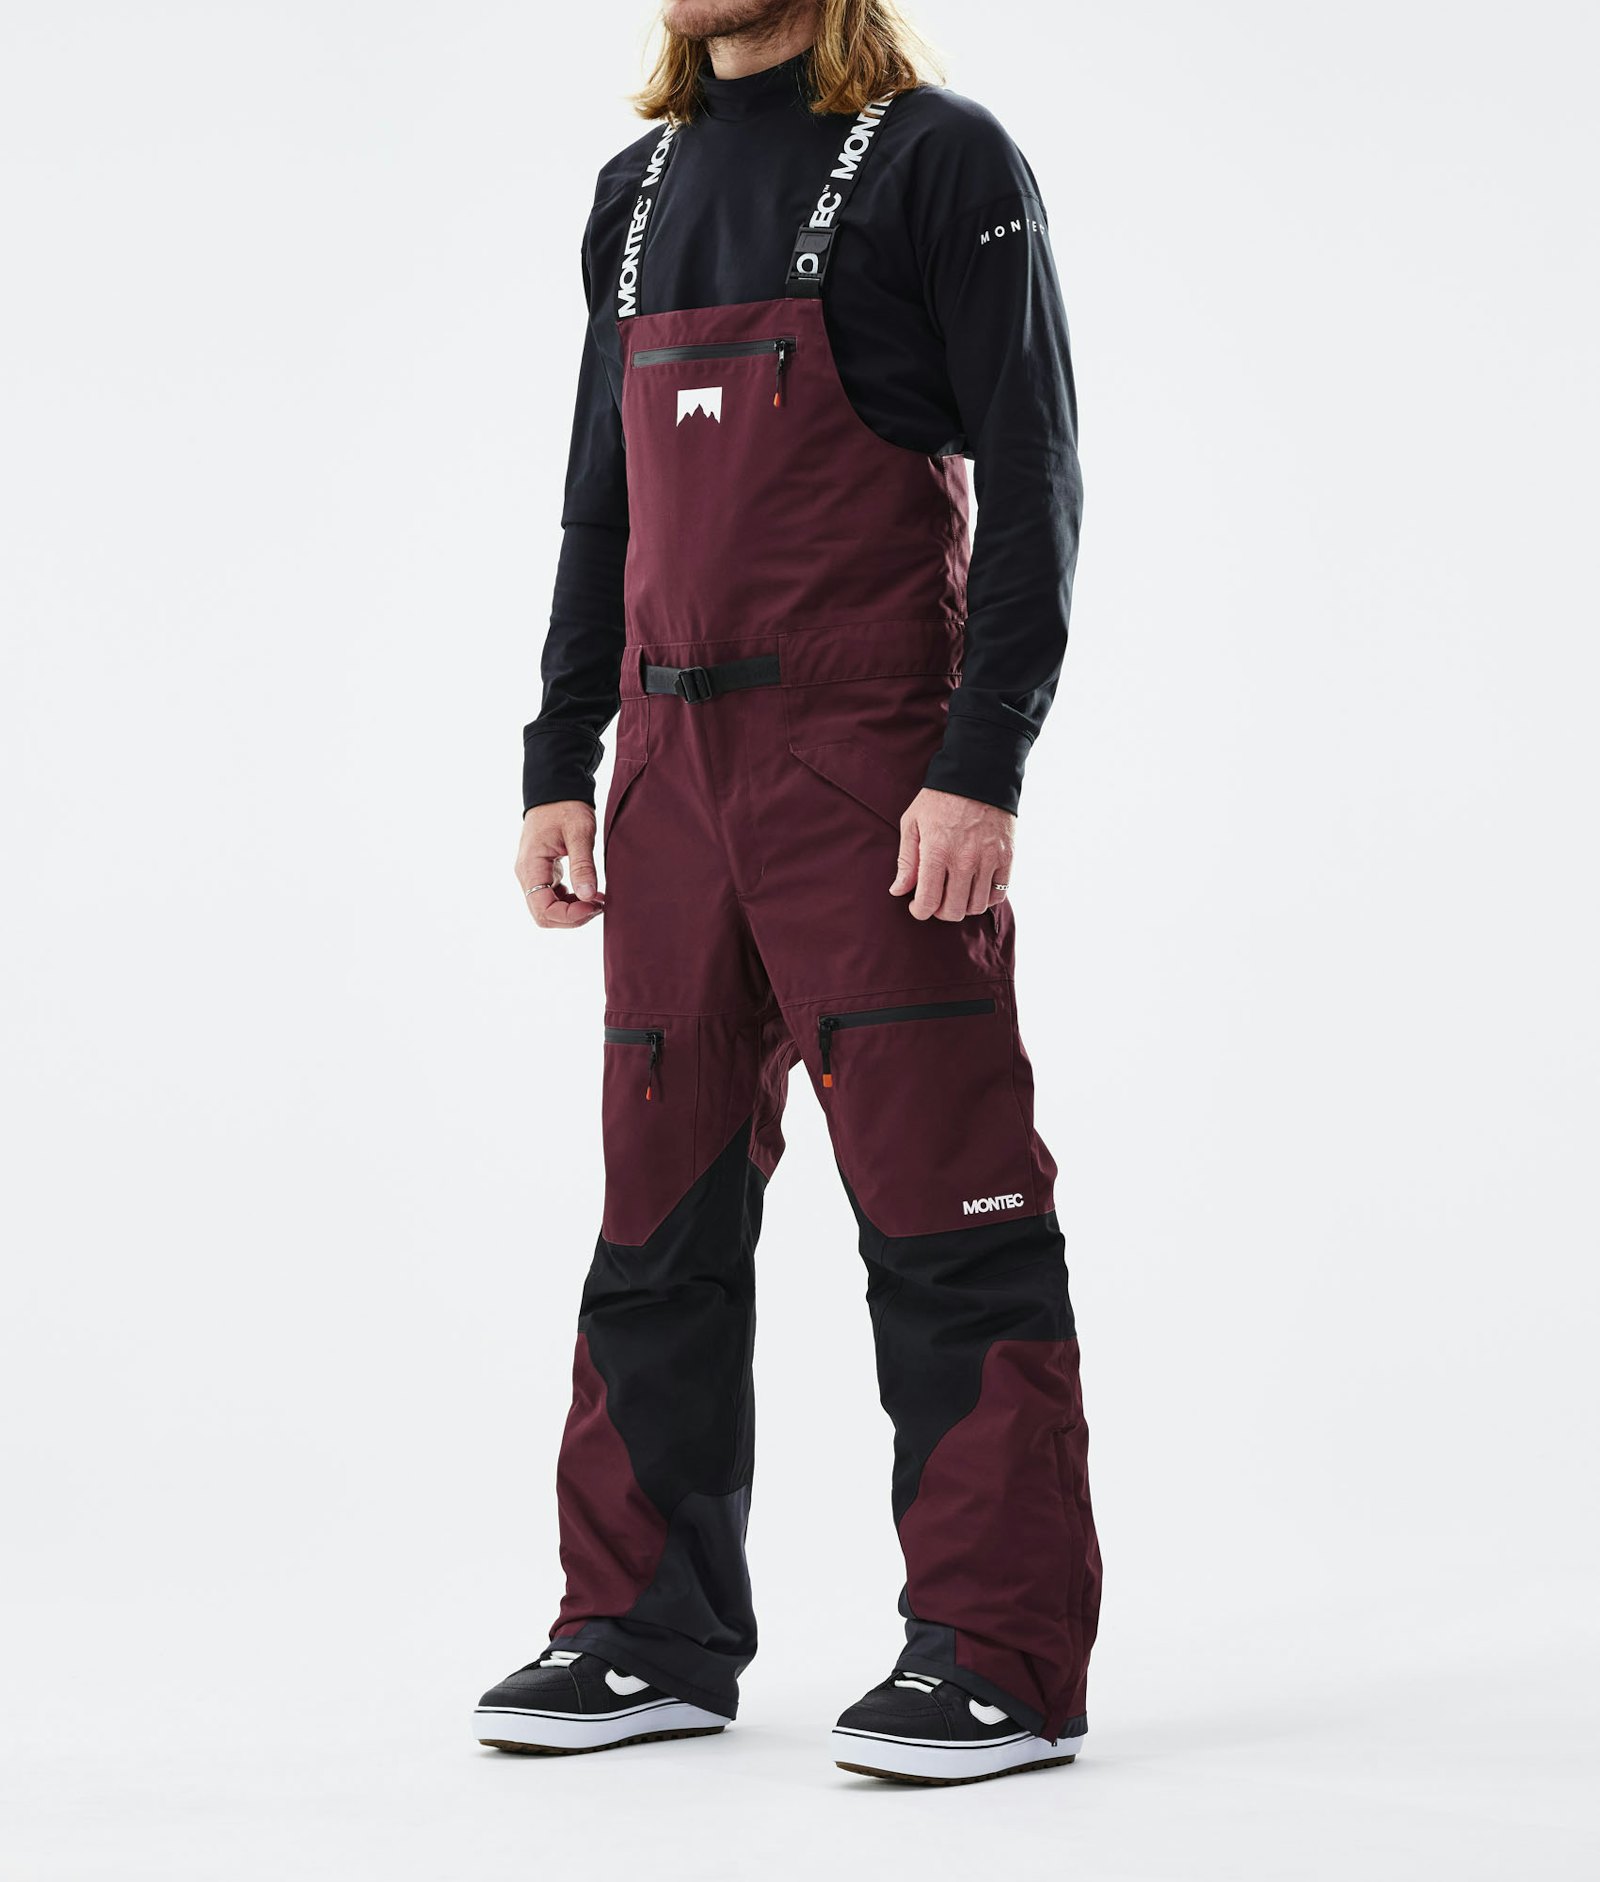 Moss 2021 Pantalones Snowboard Hombre Burgundy/Black